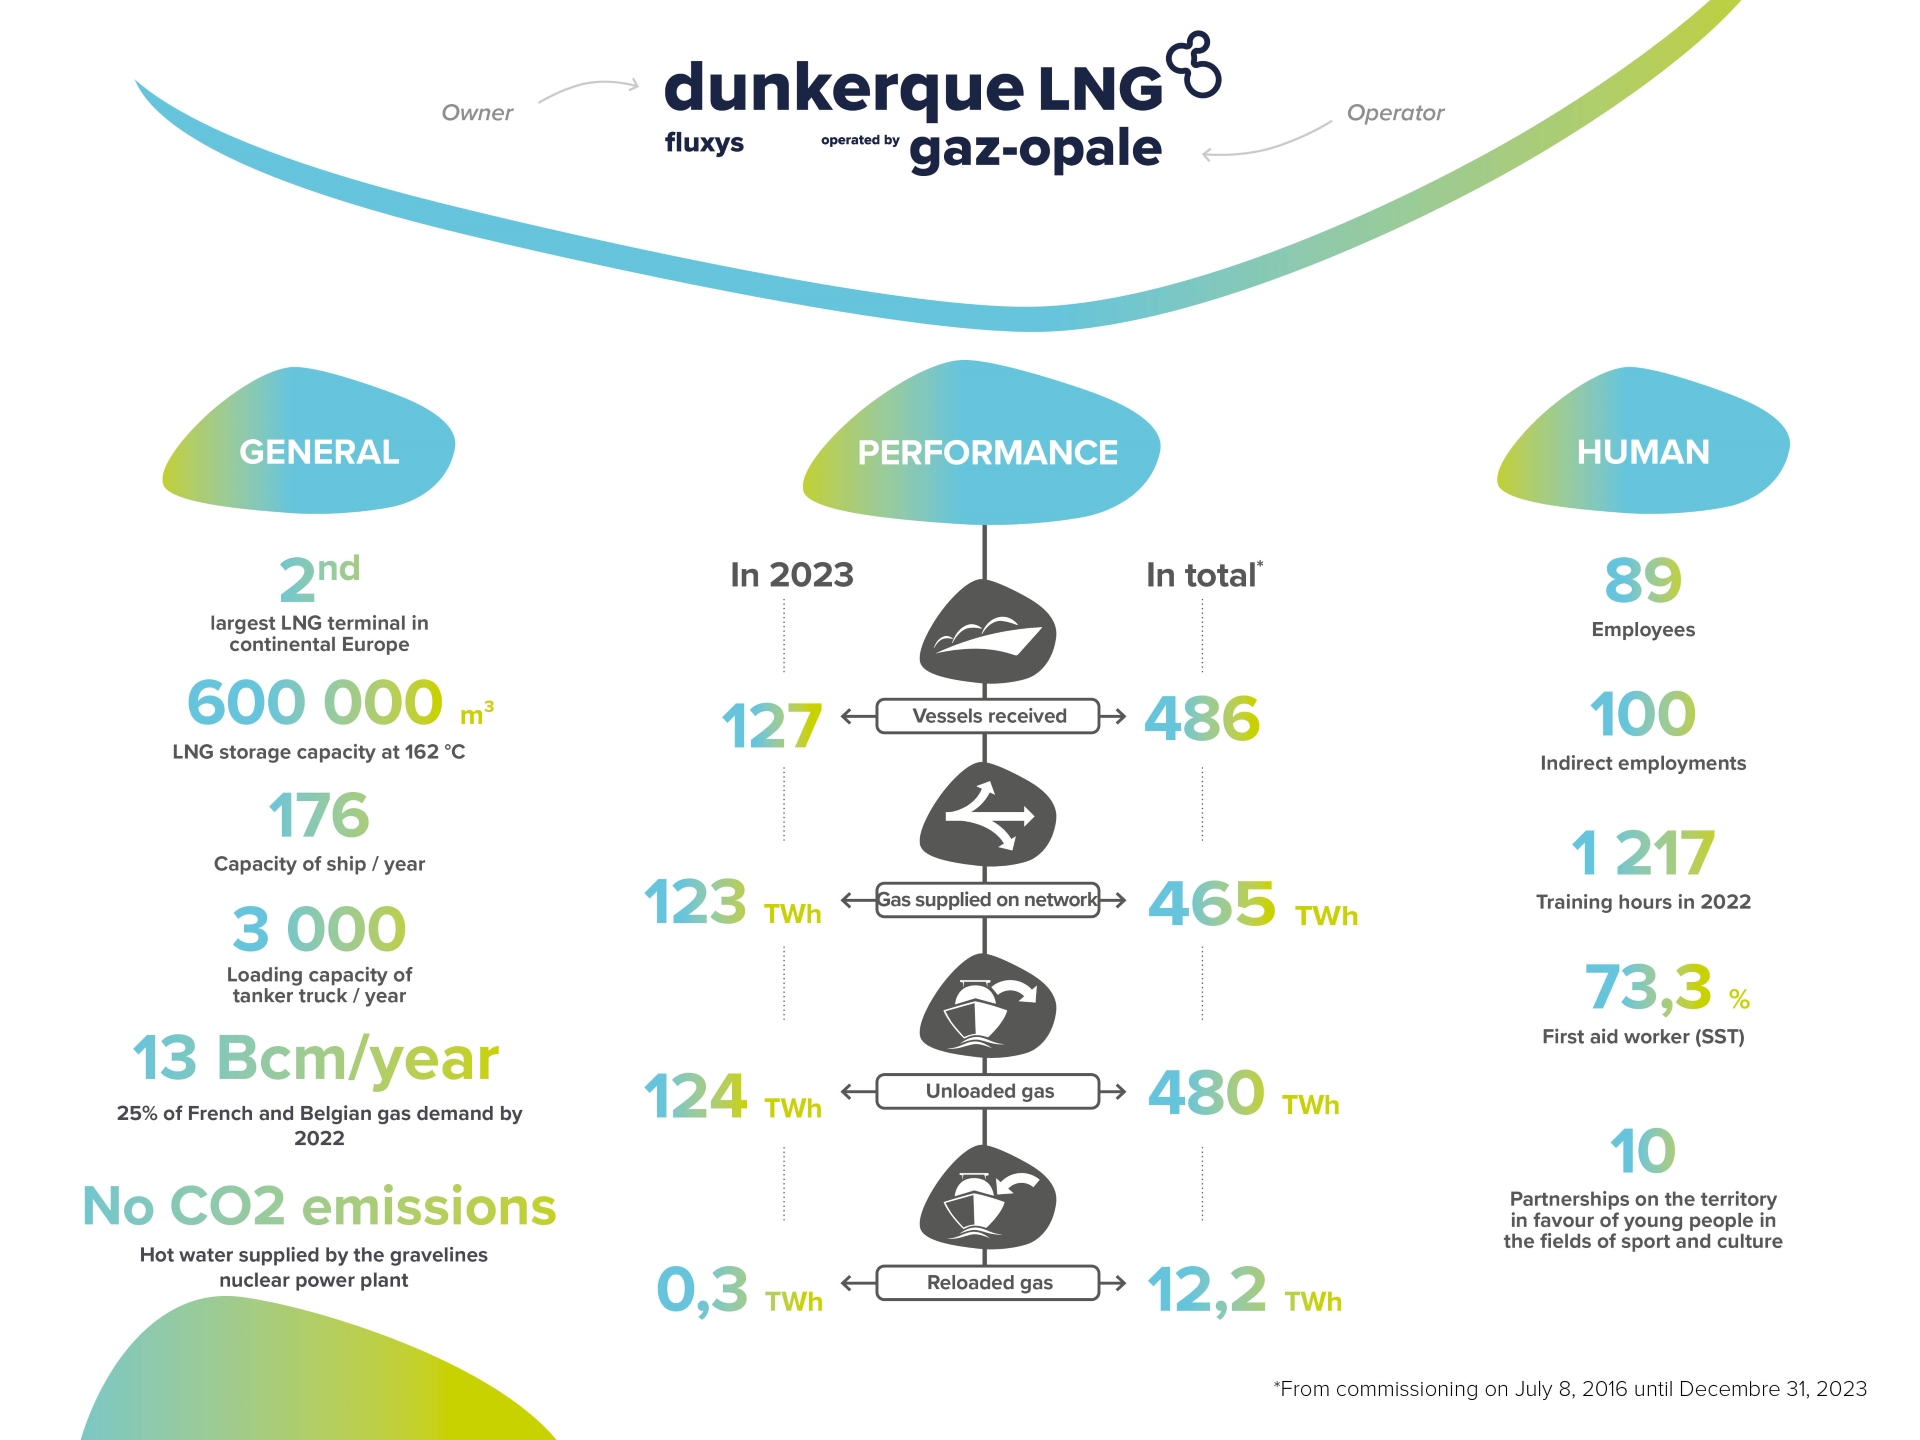 Dunkerque LNG Activities in 2023